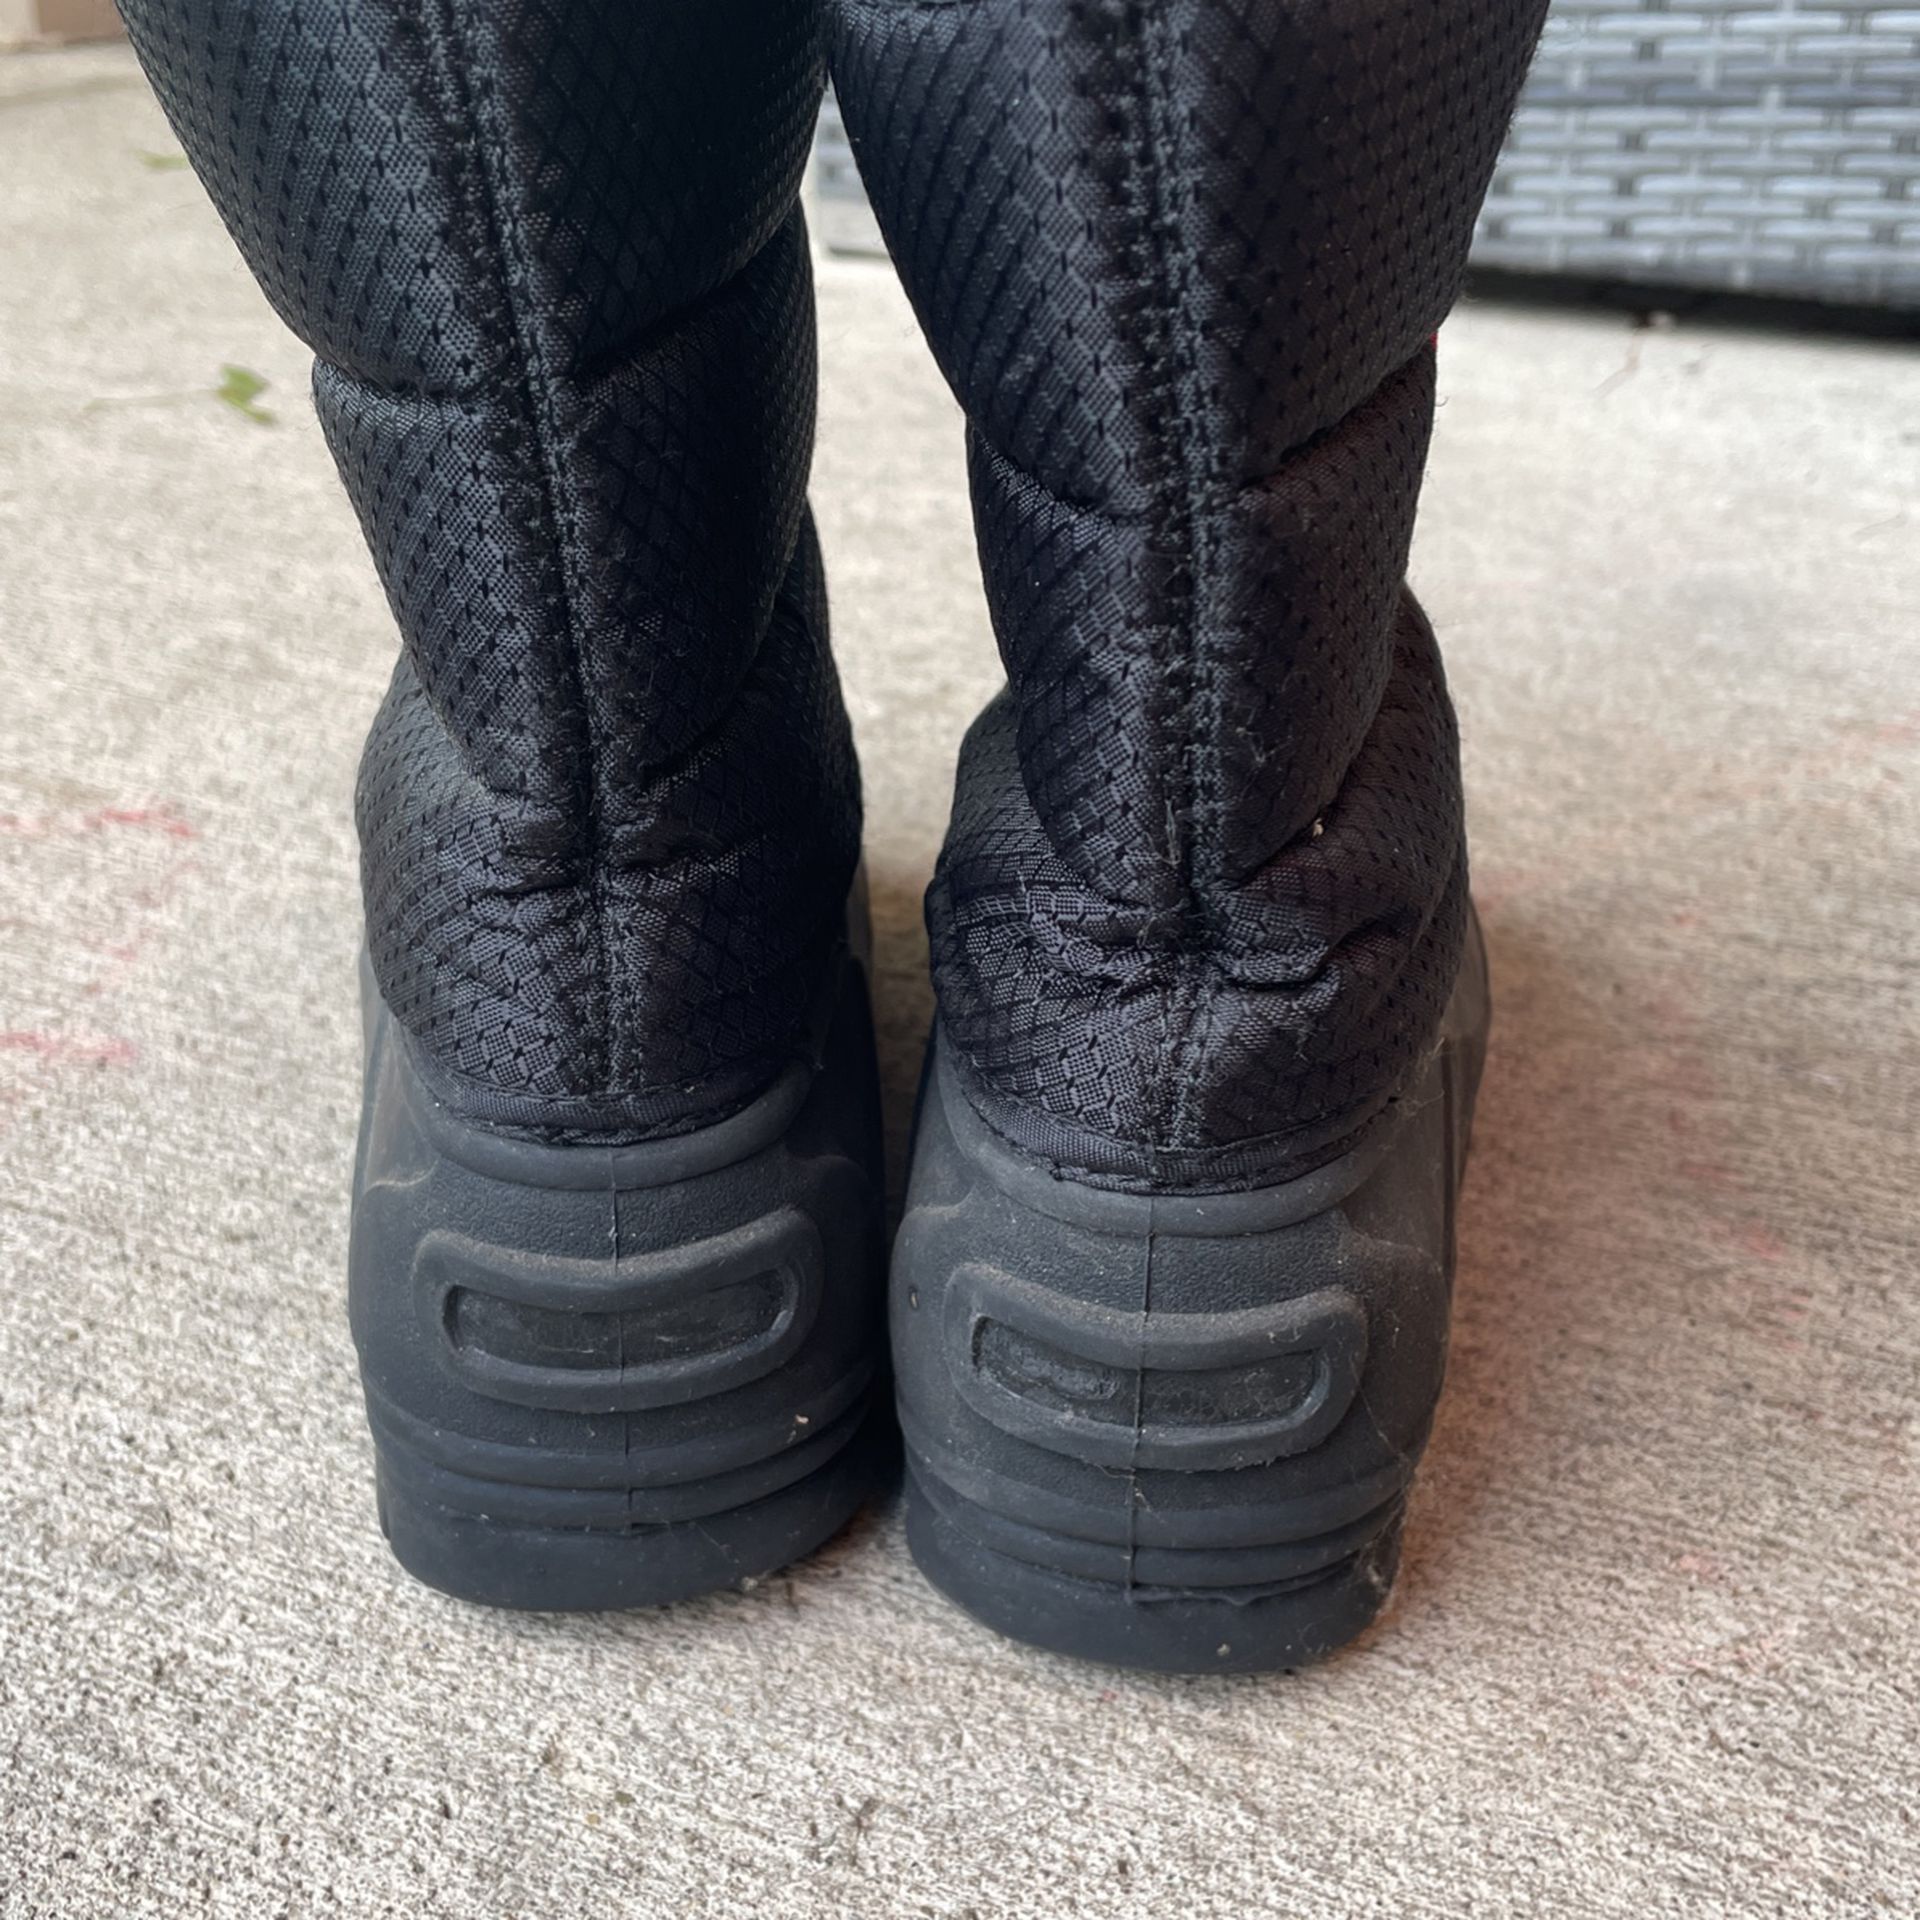 Snow Boots (size 4m)